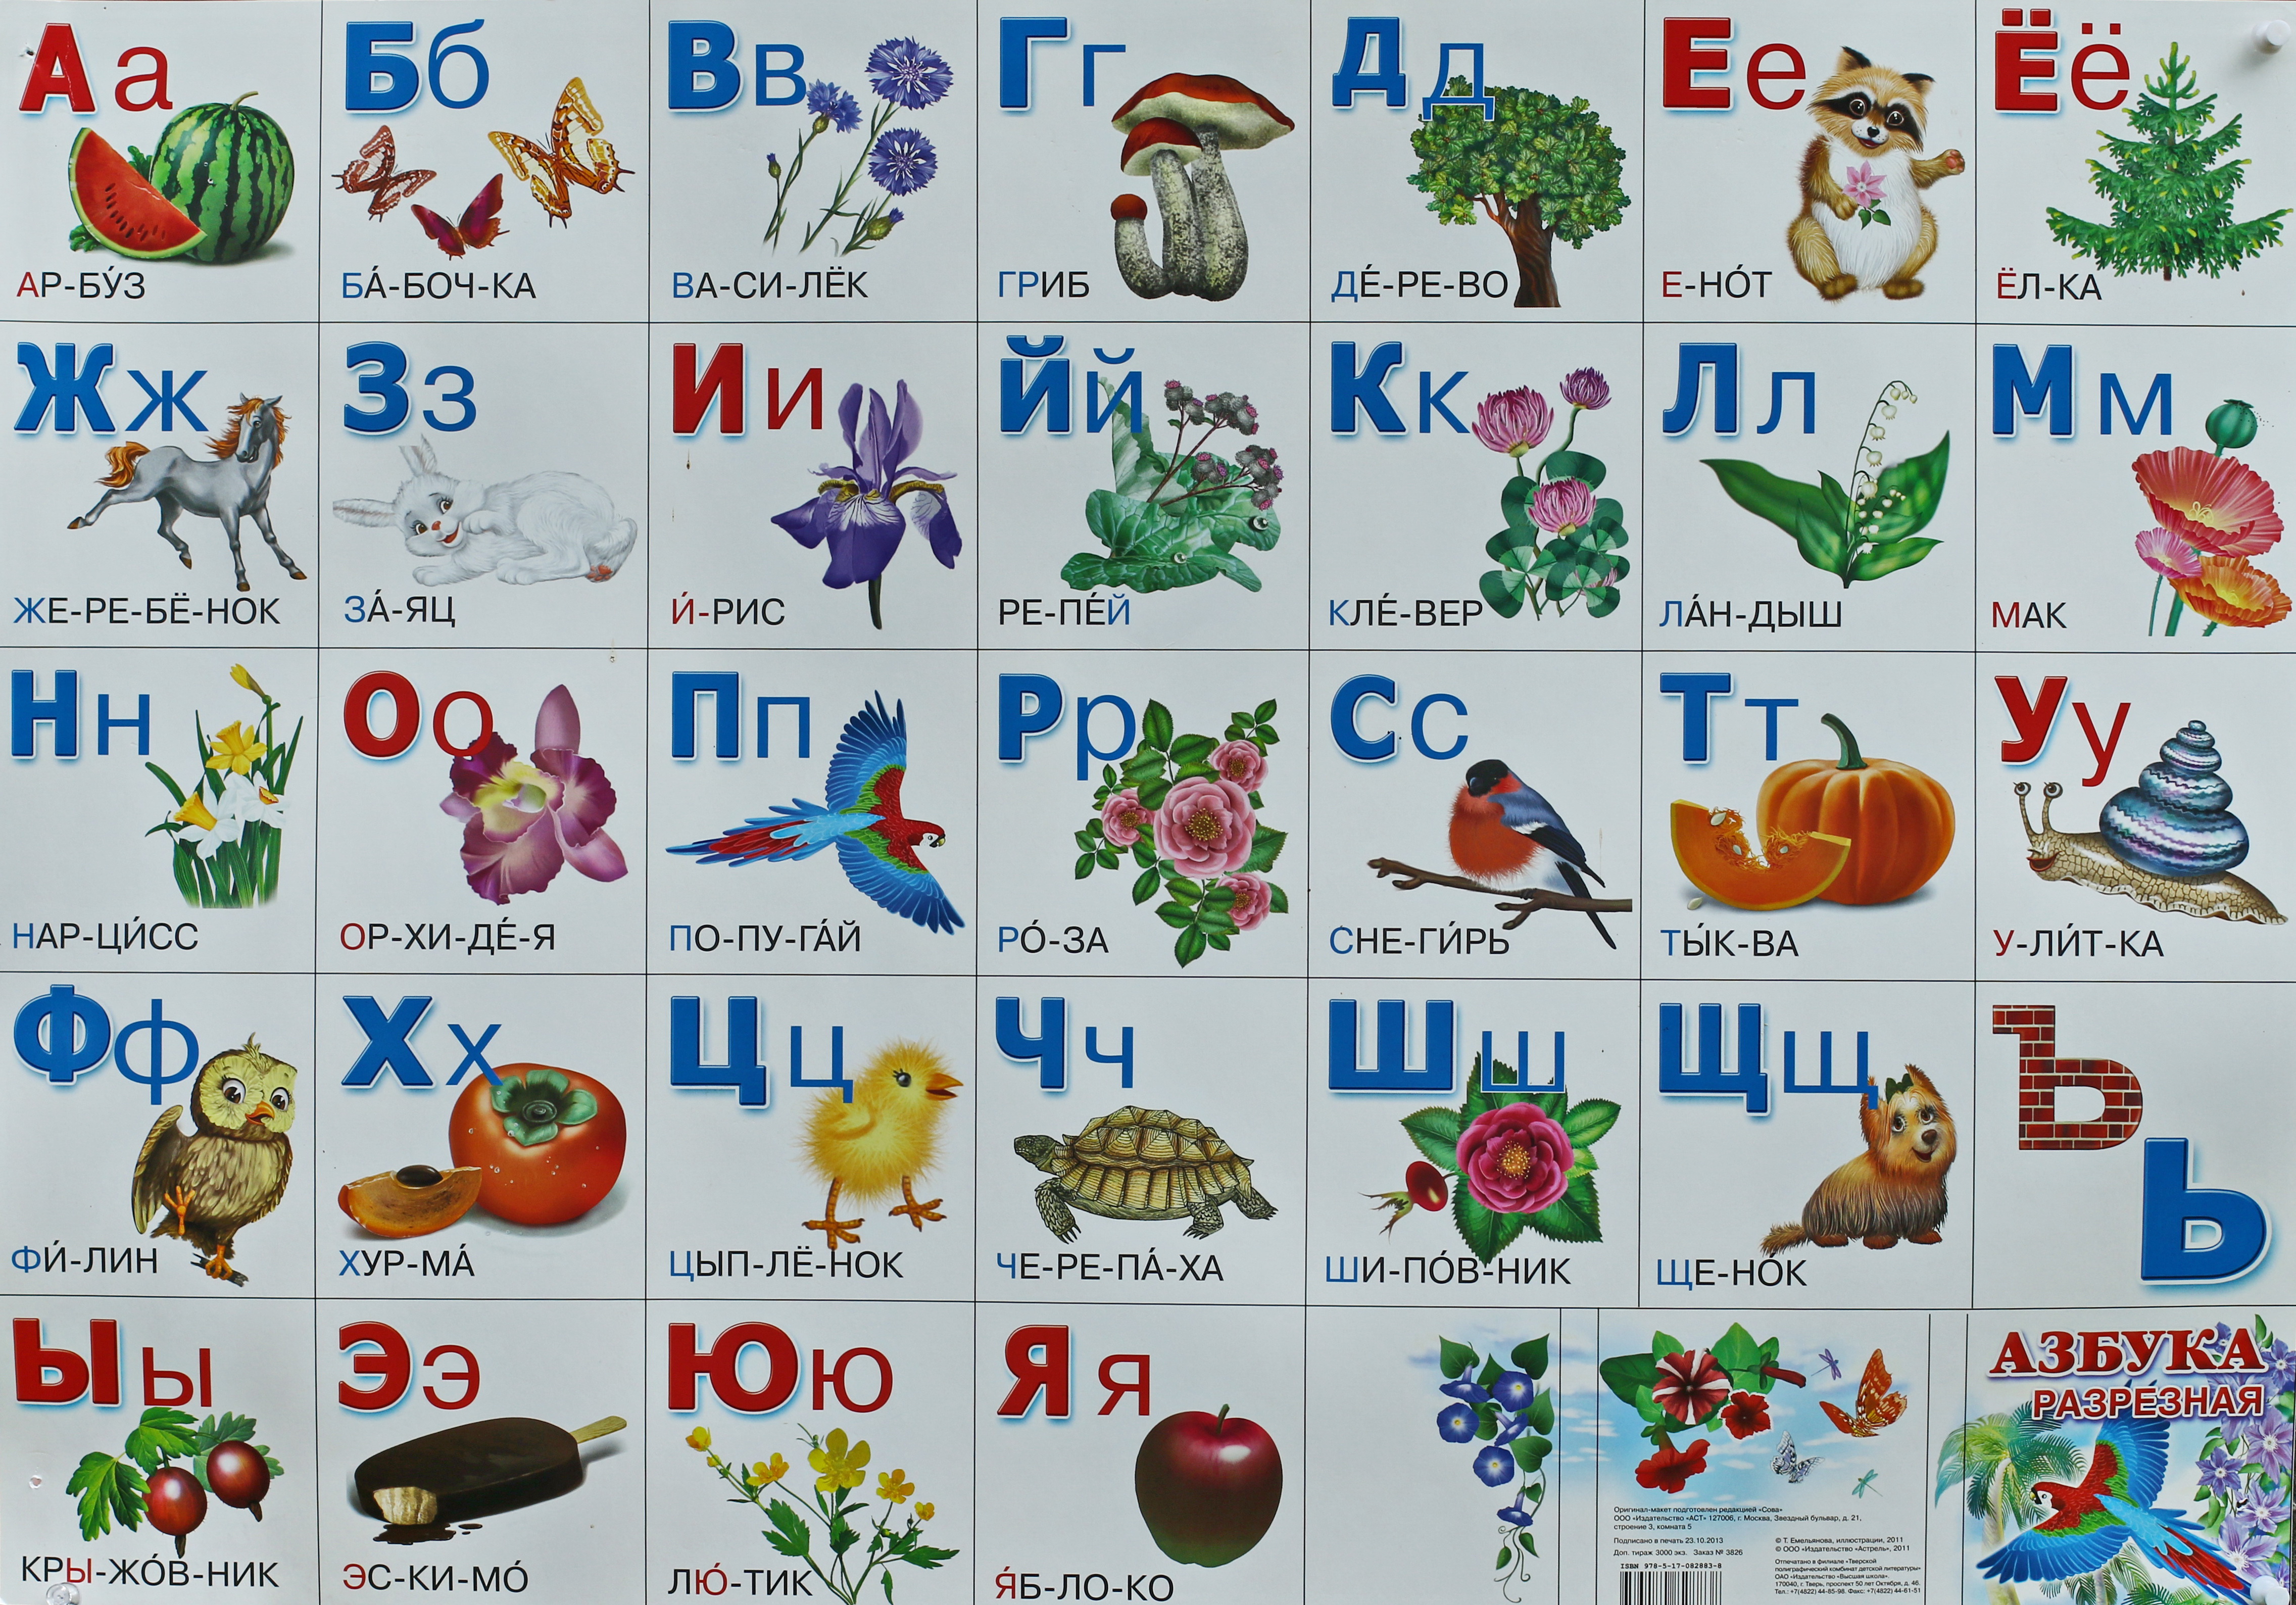 Русский алфавит картинки